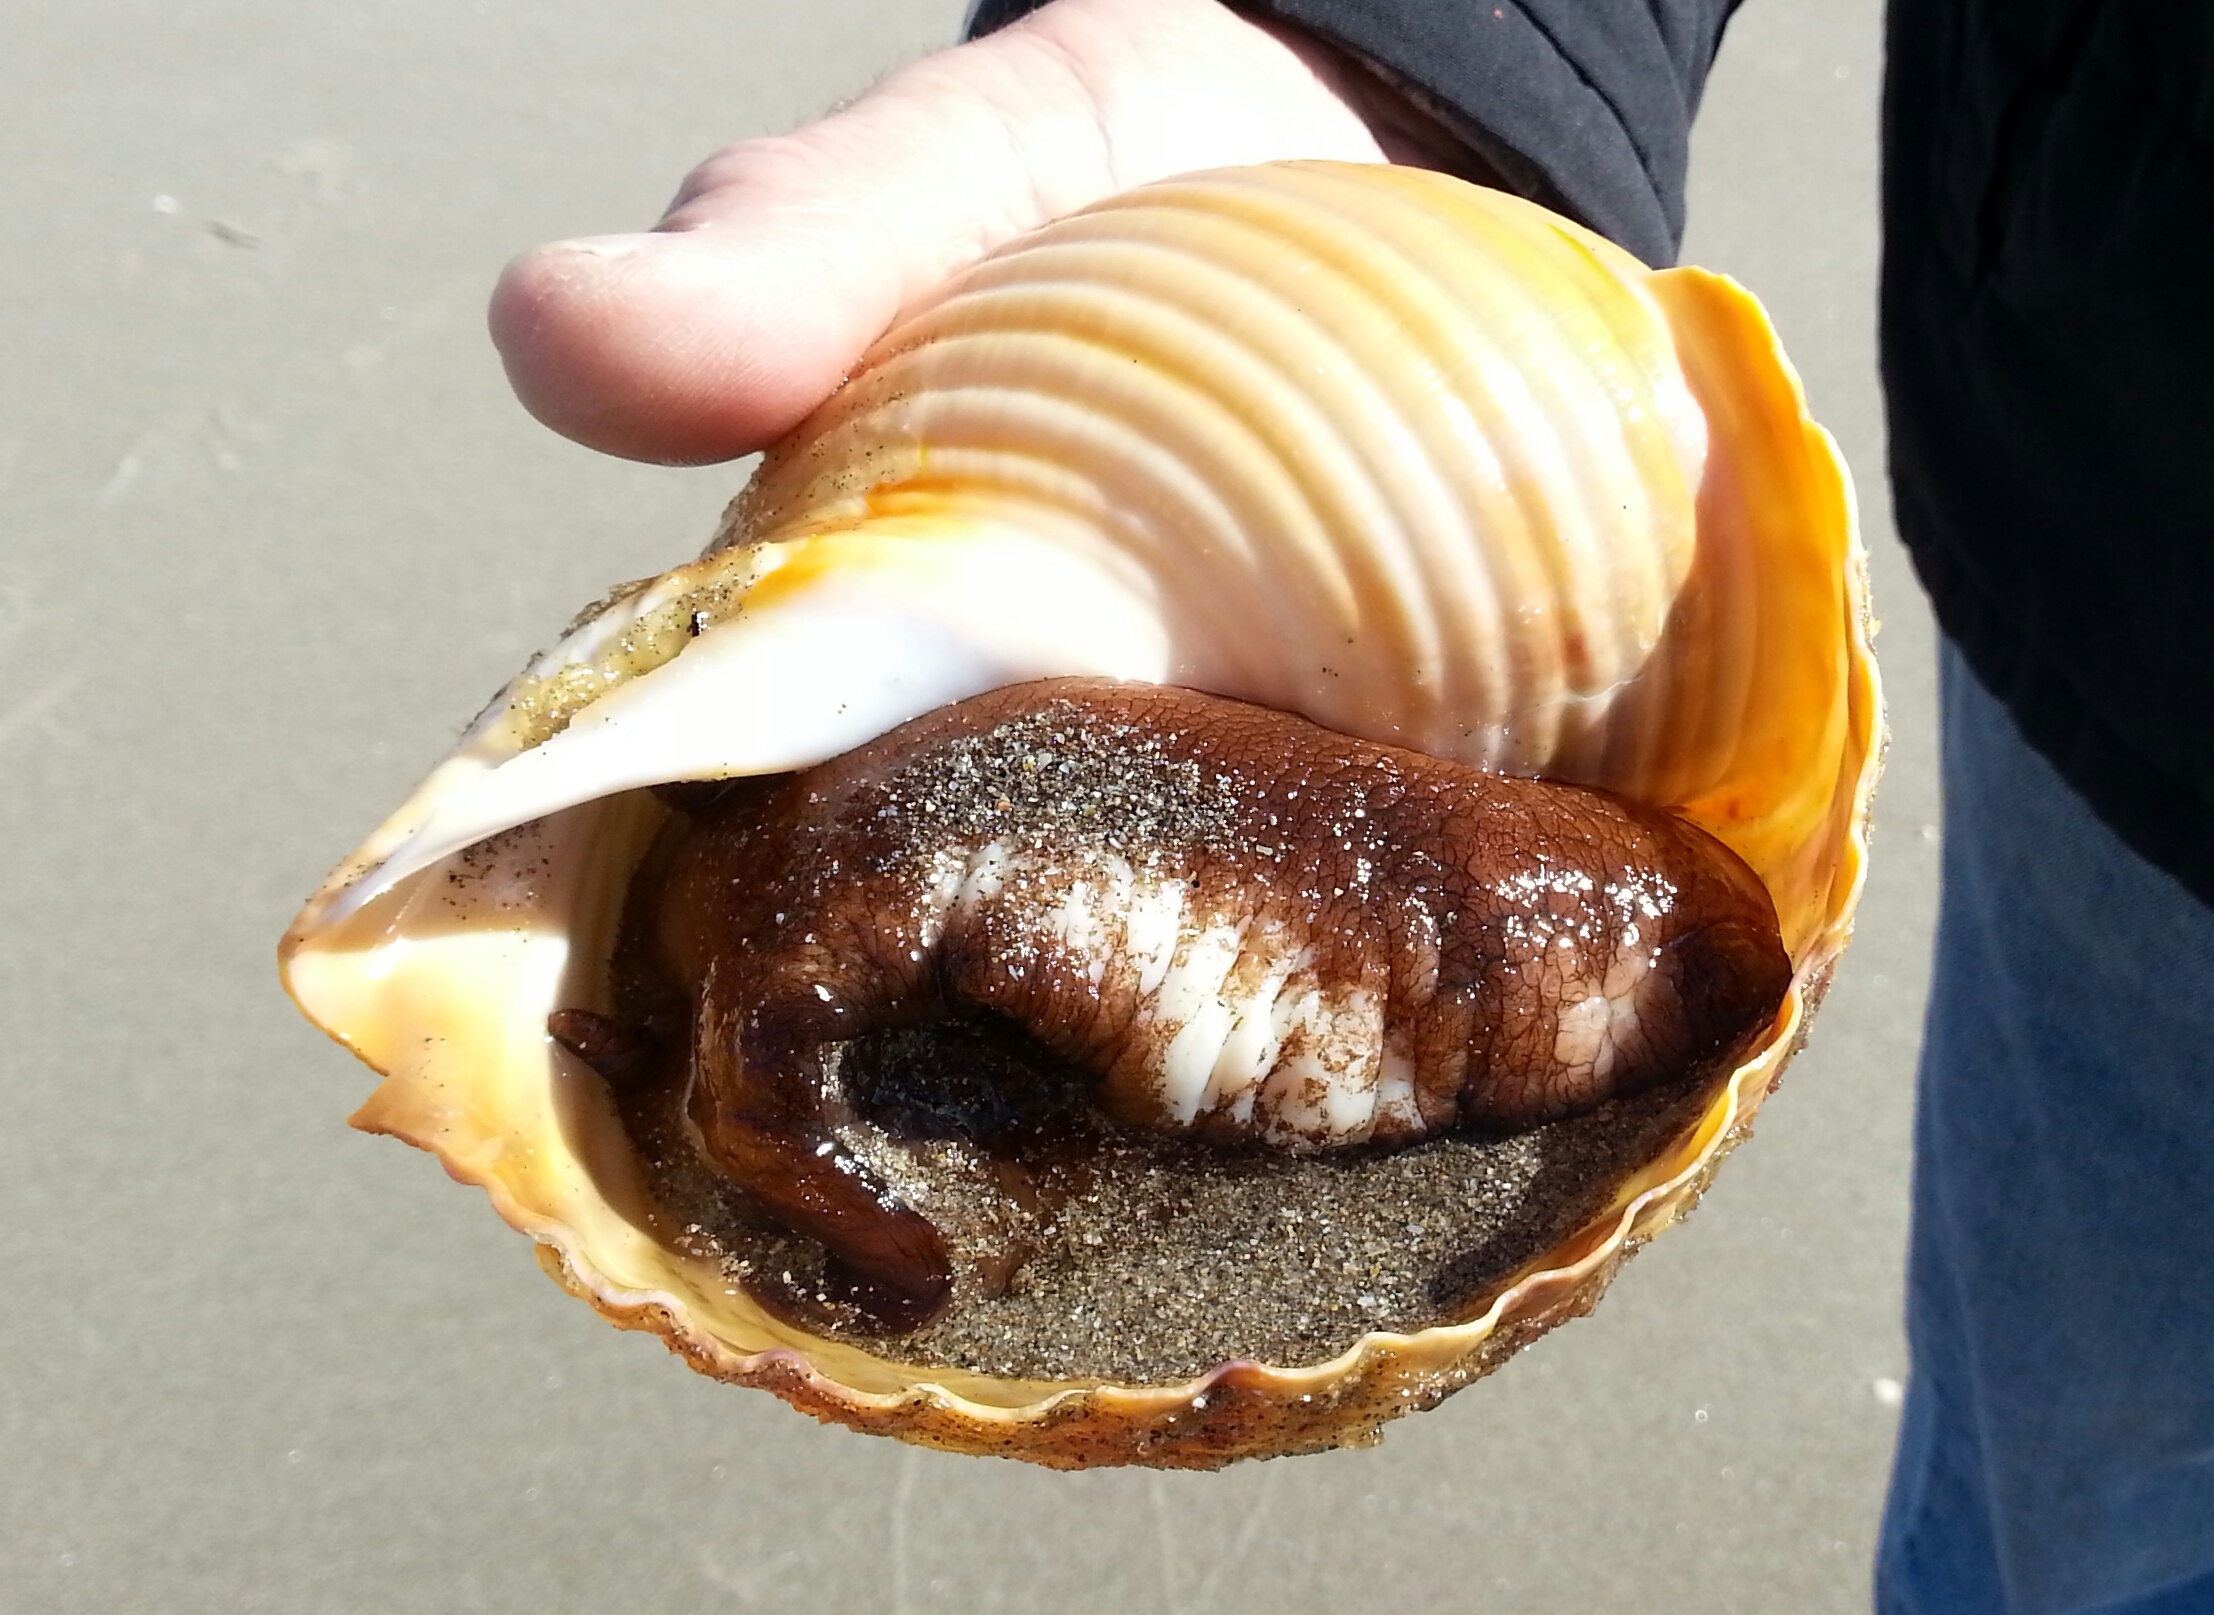 giant sea snails